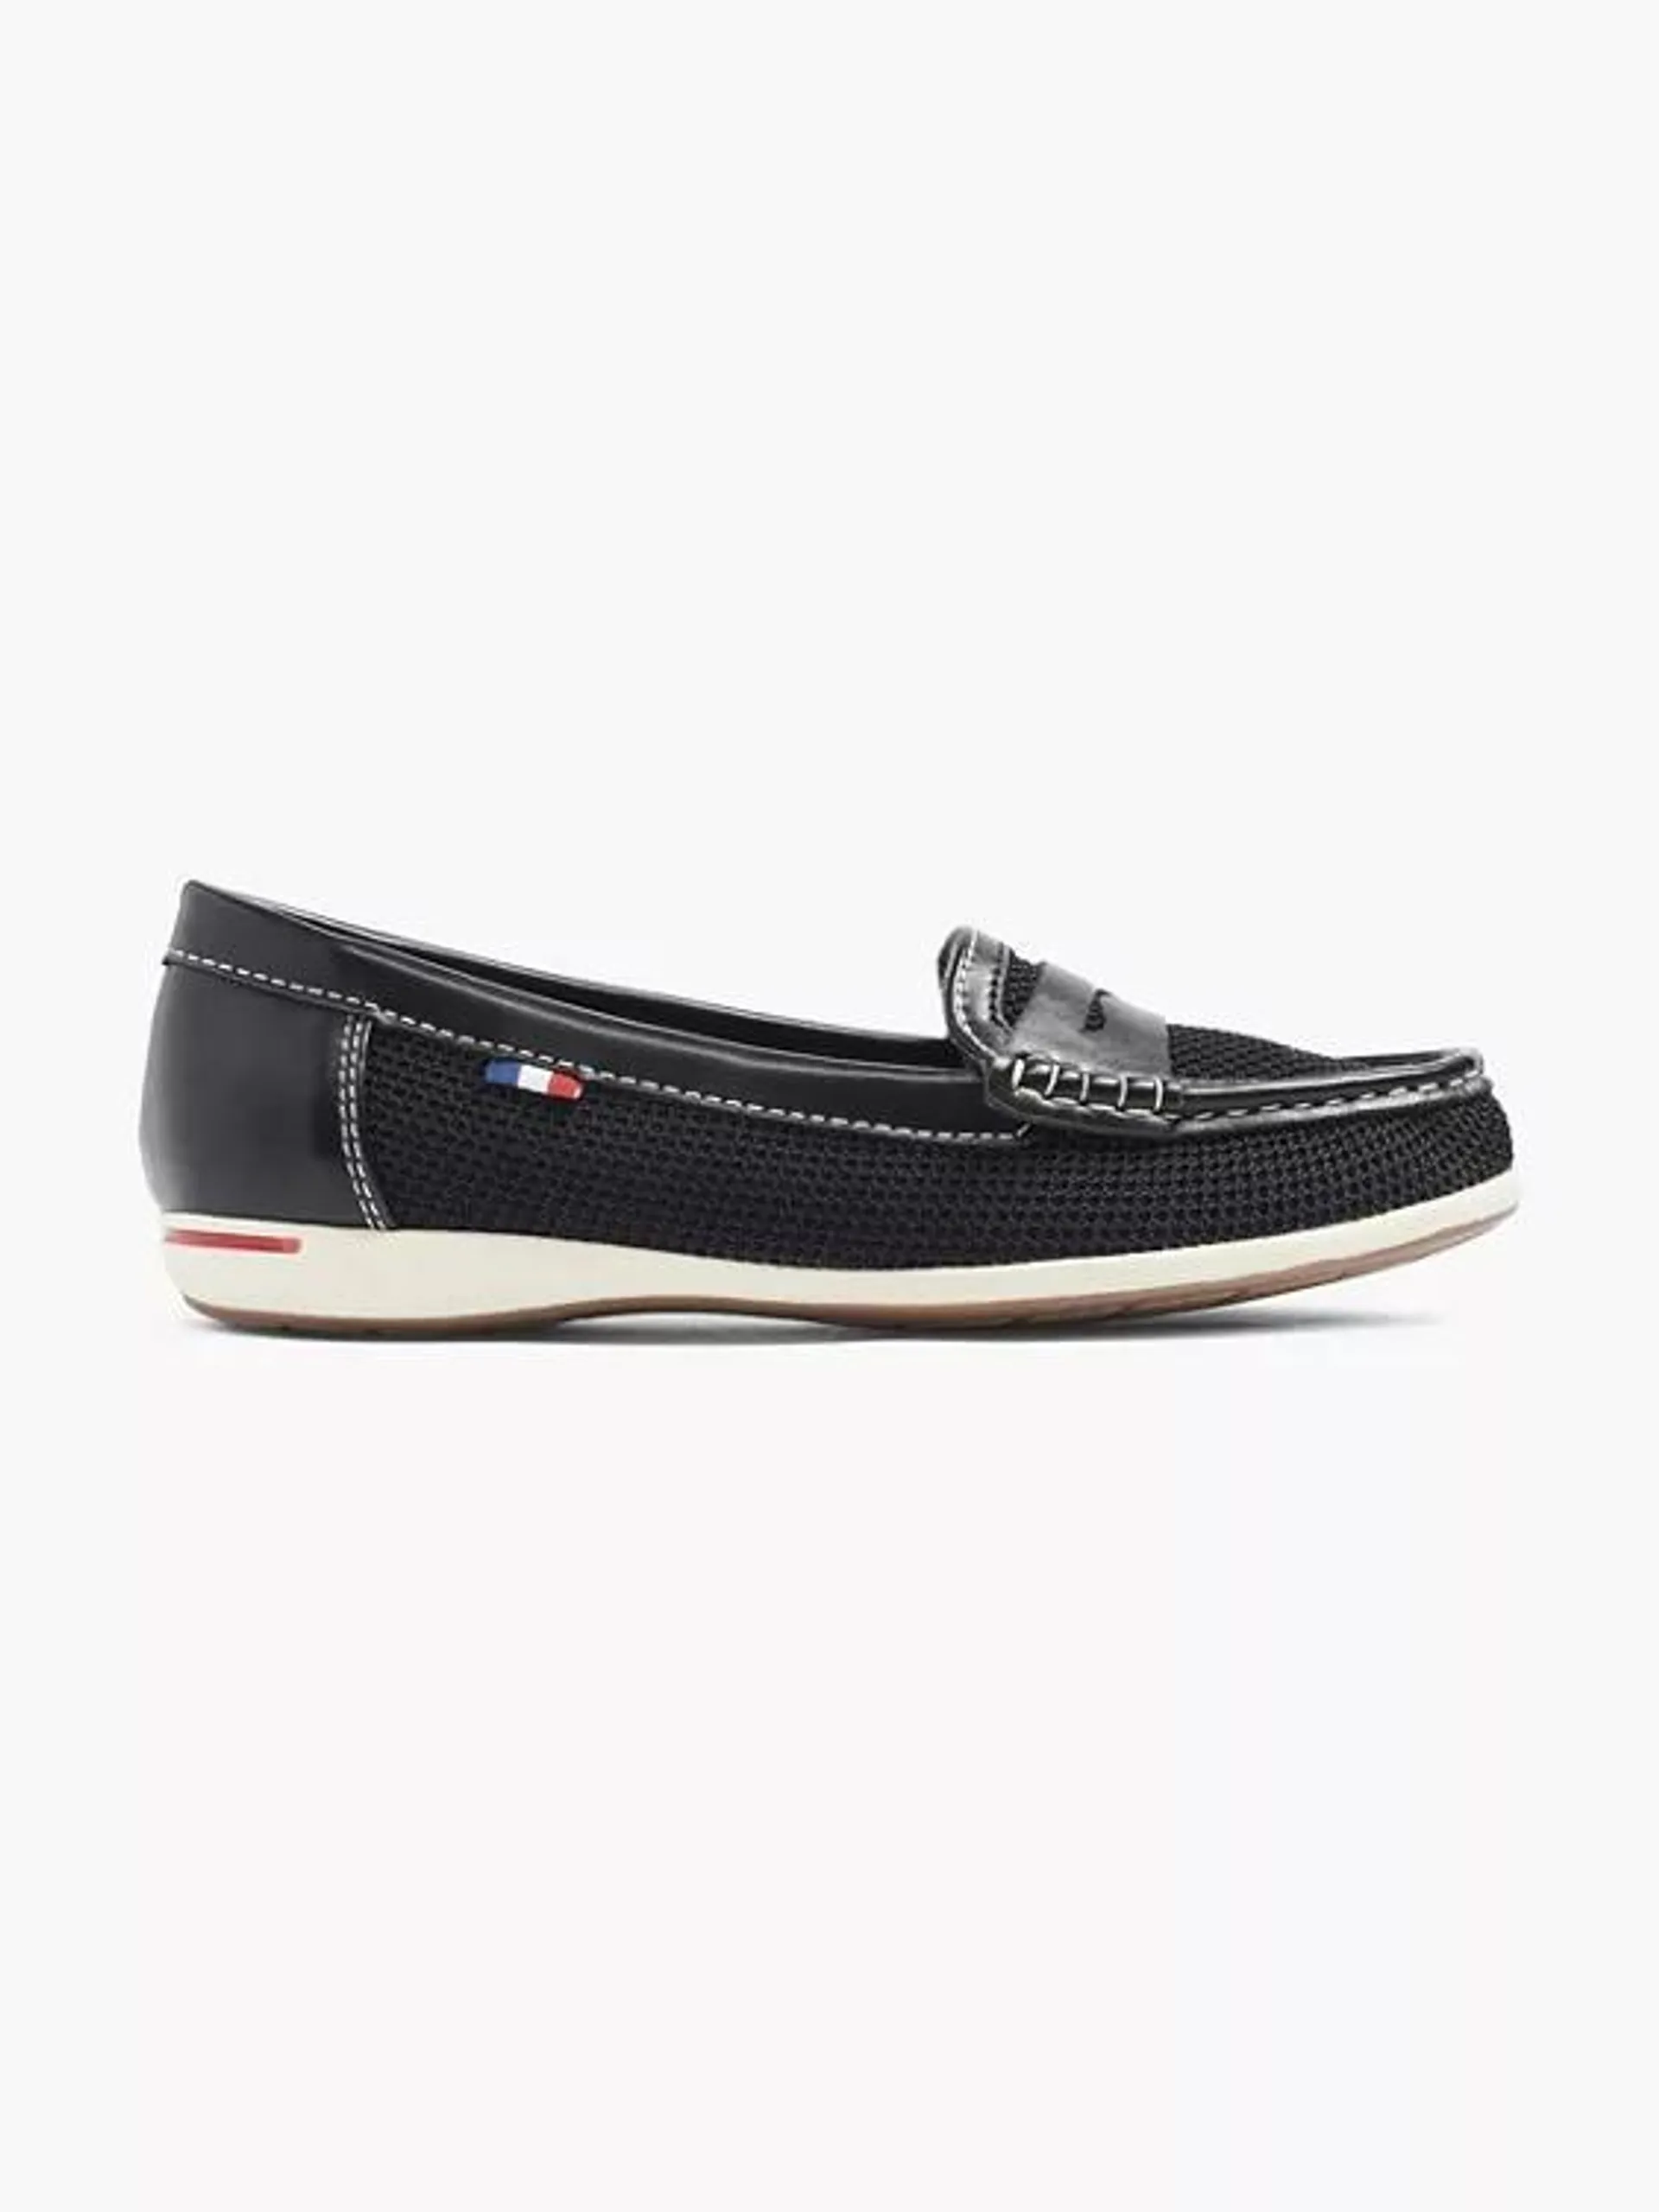 Ladies Black Slip-on Boat Shoes